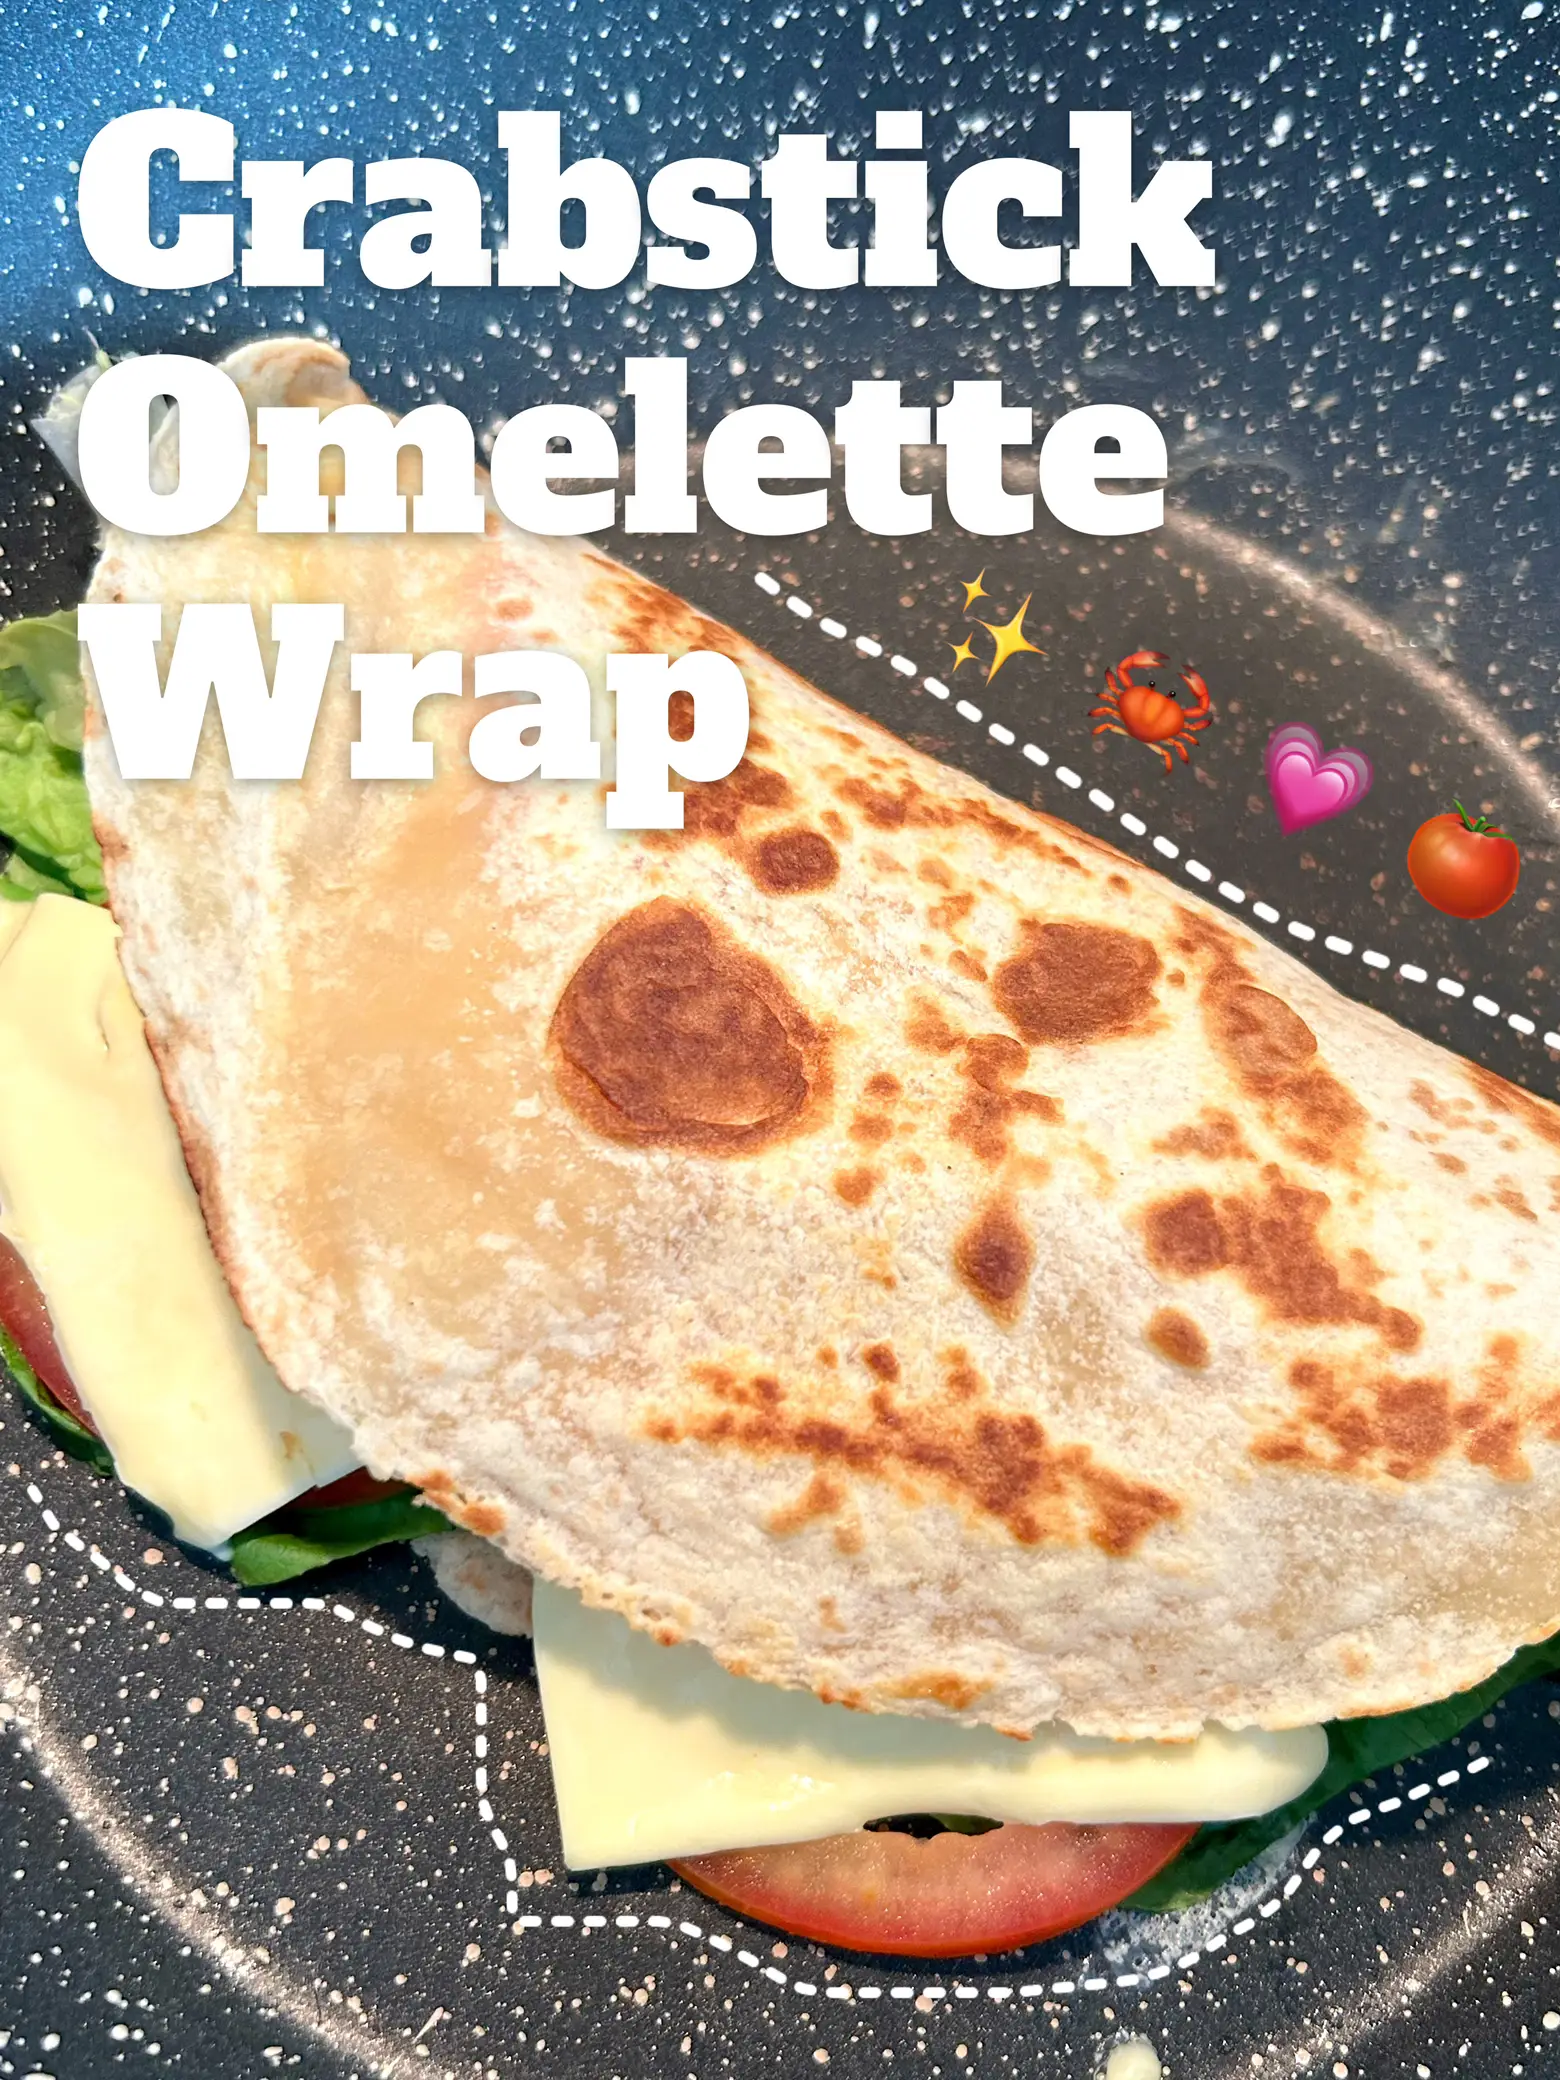 Let’s make crabstick omelette today! 💗's images